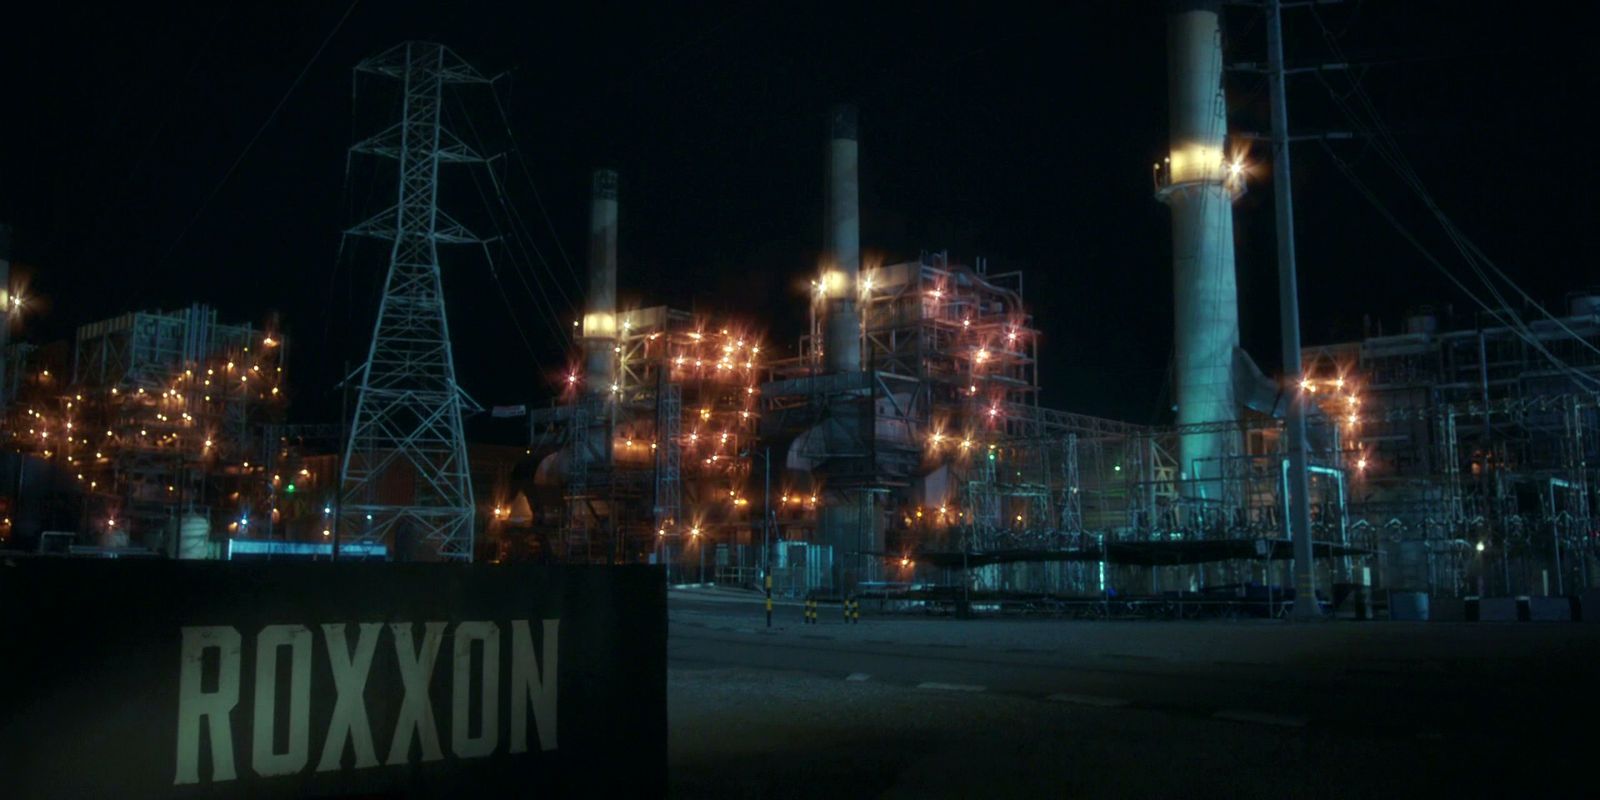 Agent Carter - Roxxon Refinery